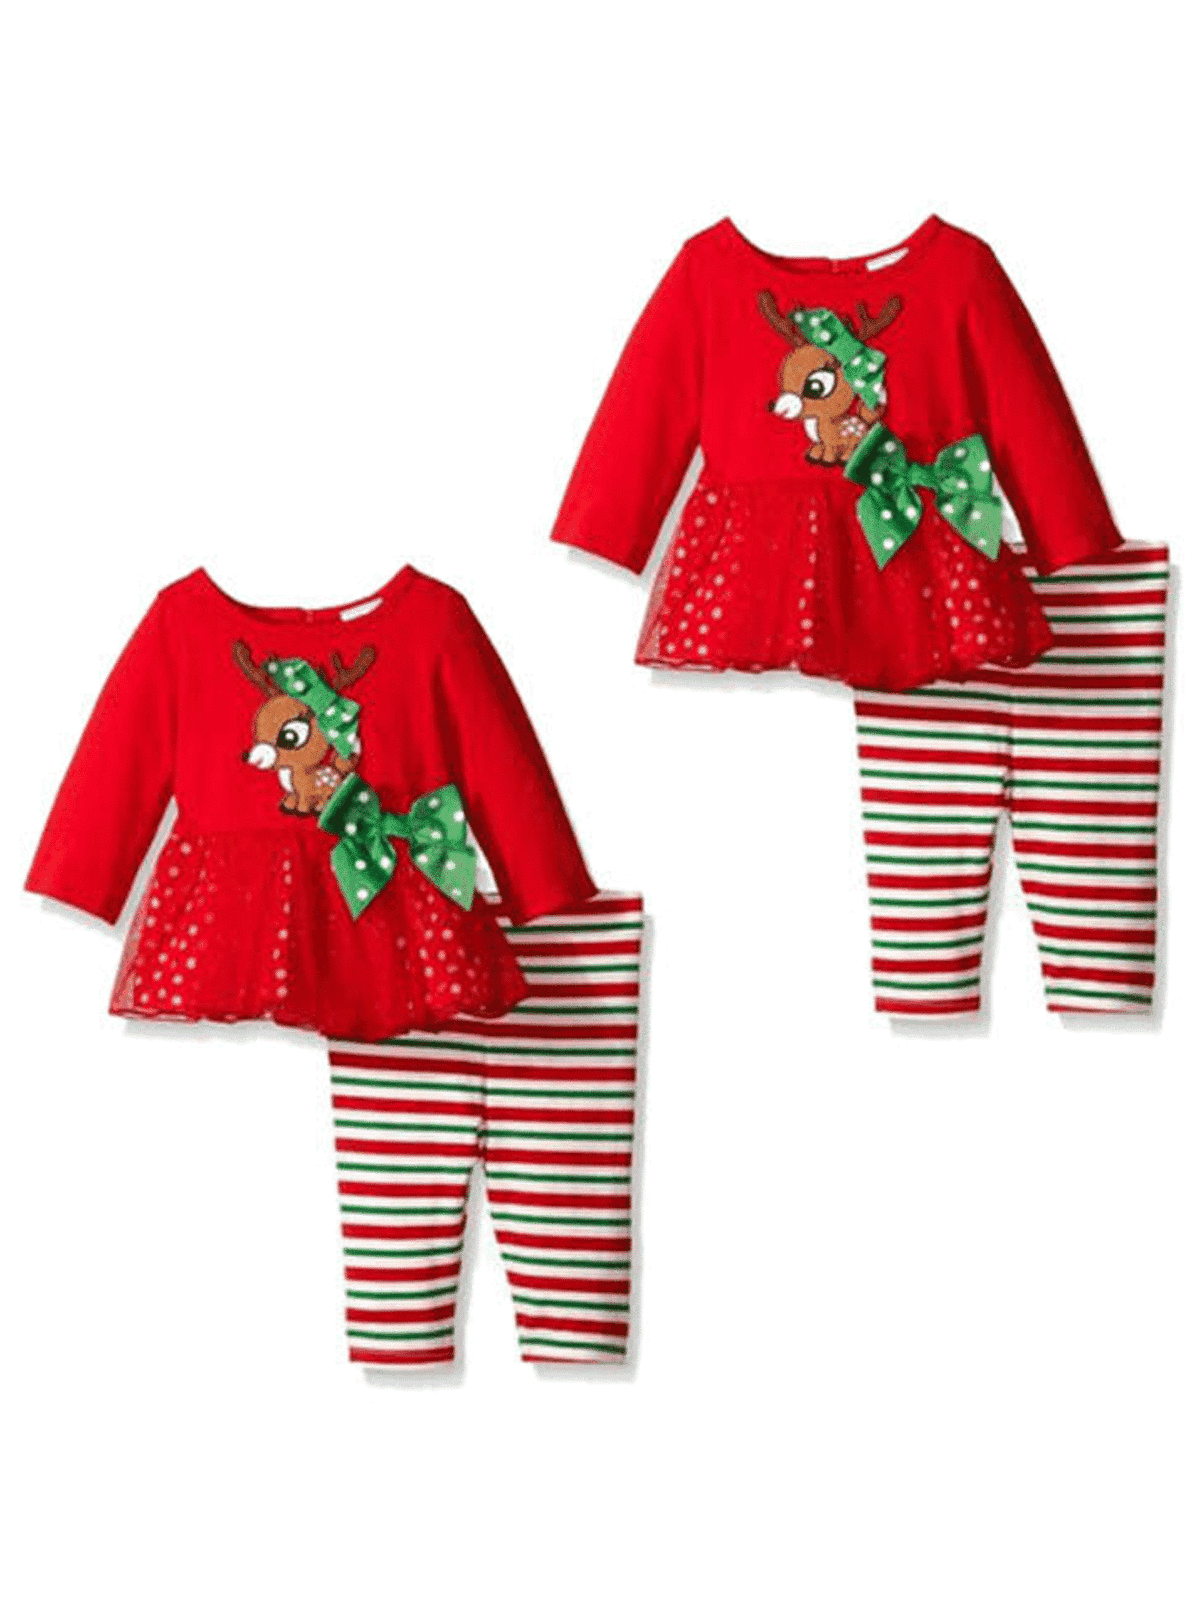 2pcs Newborn Baby Boy Girl Outfit Tops+pants Infant Toddler Xmas Clothes set 